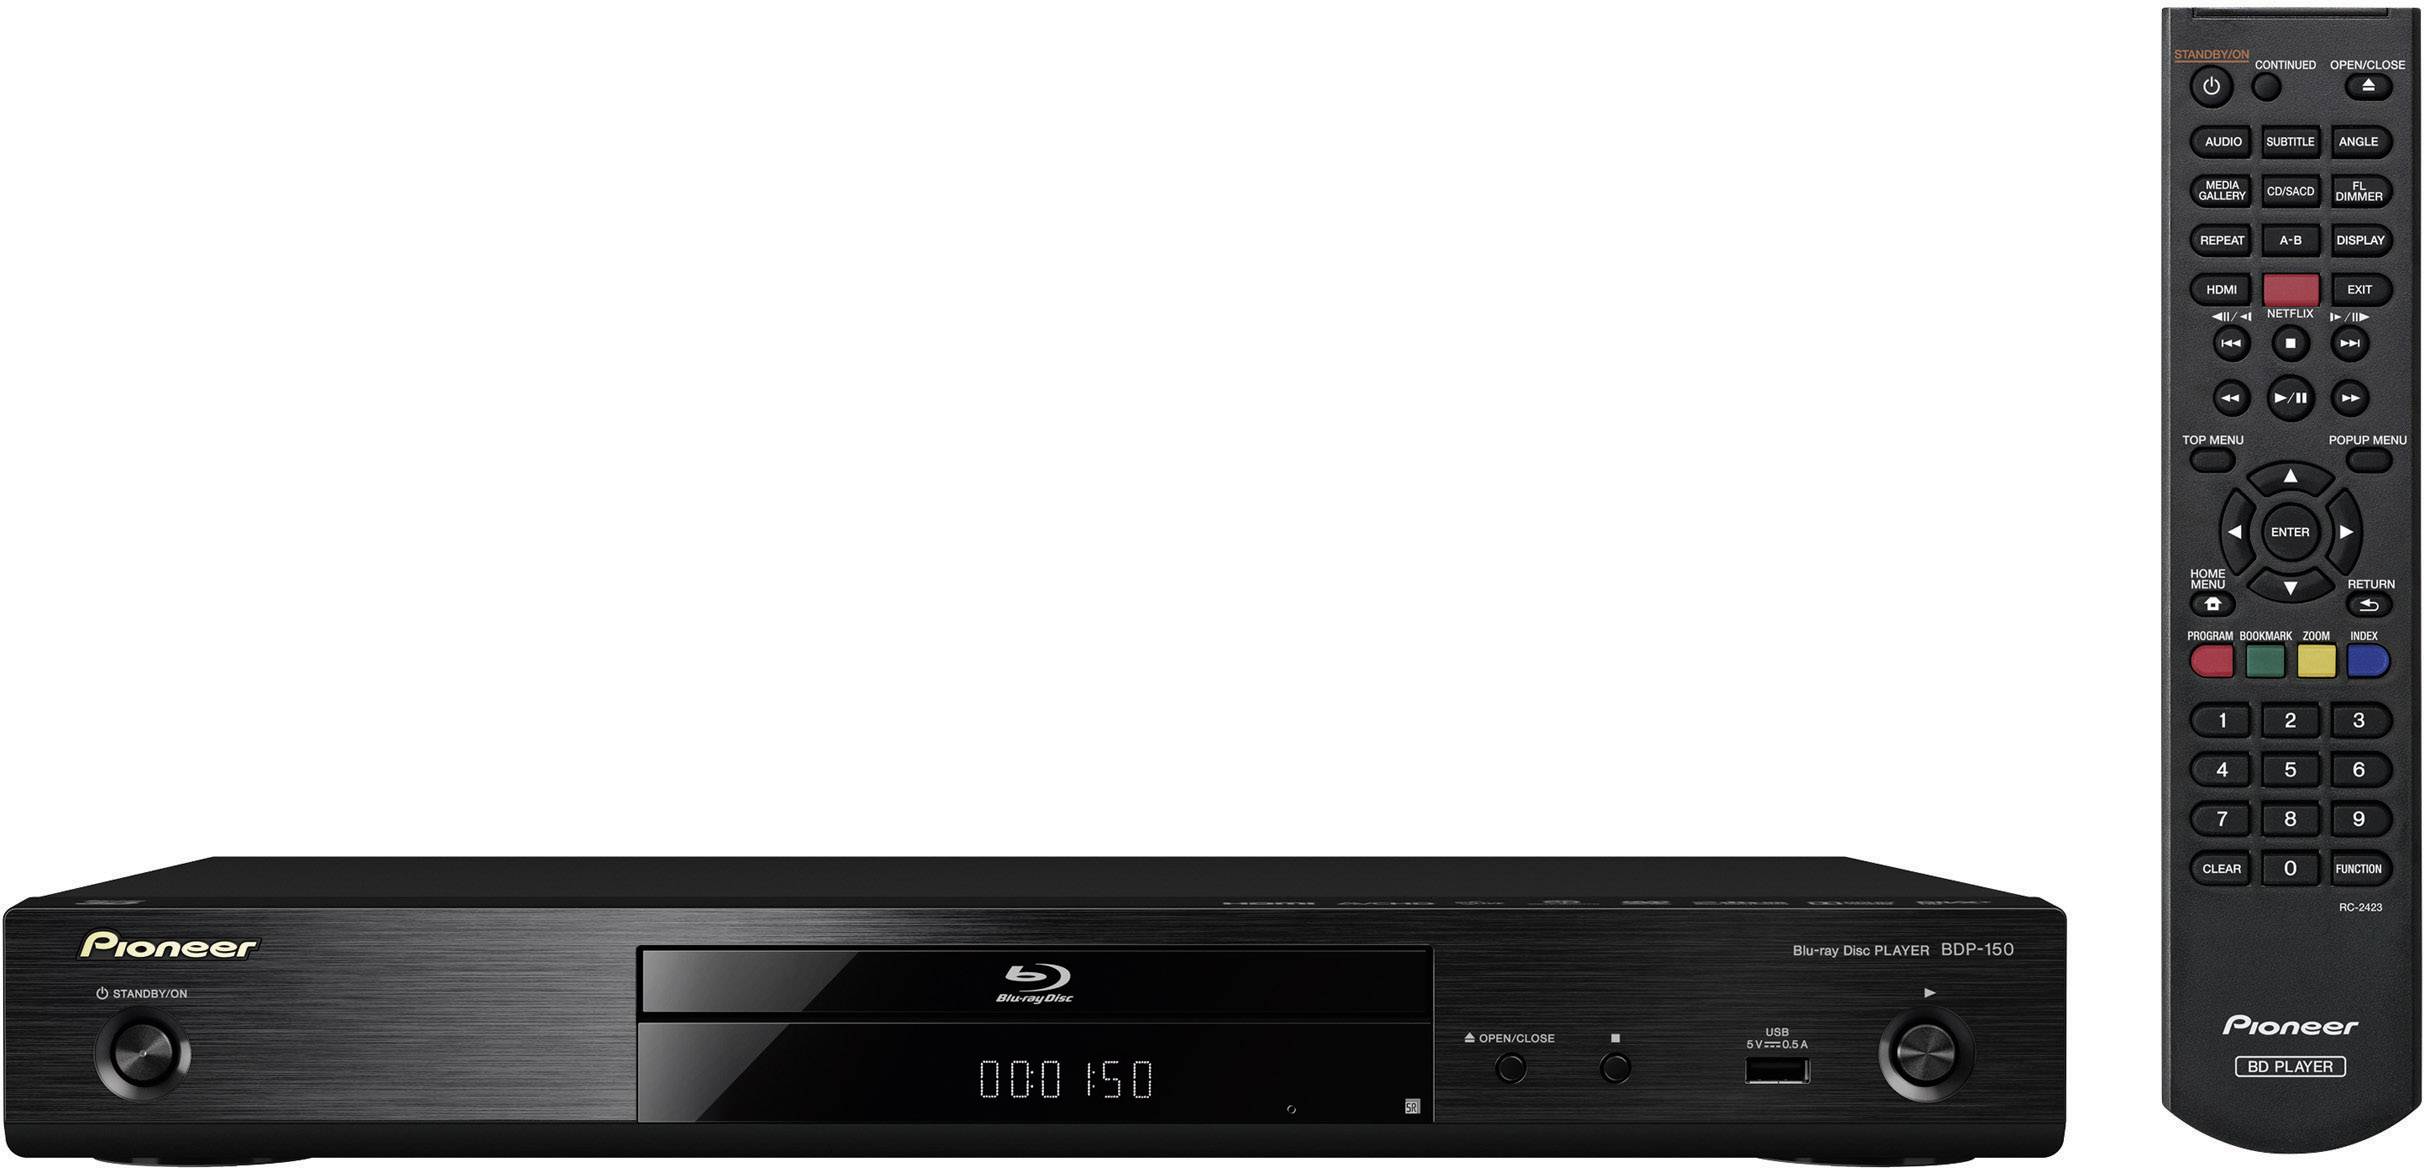 schwarz HDMI, 1080p Upscaler, DLNA 1.5, Control App., Wlan-ready, USB Pioneer BDP-150-K 3D Blu-ray Player